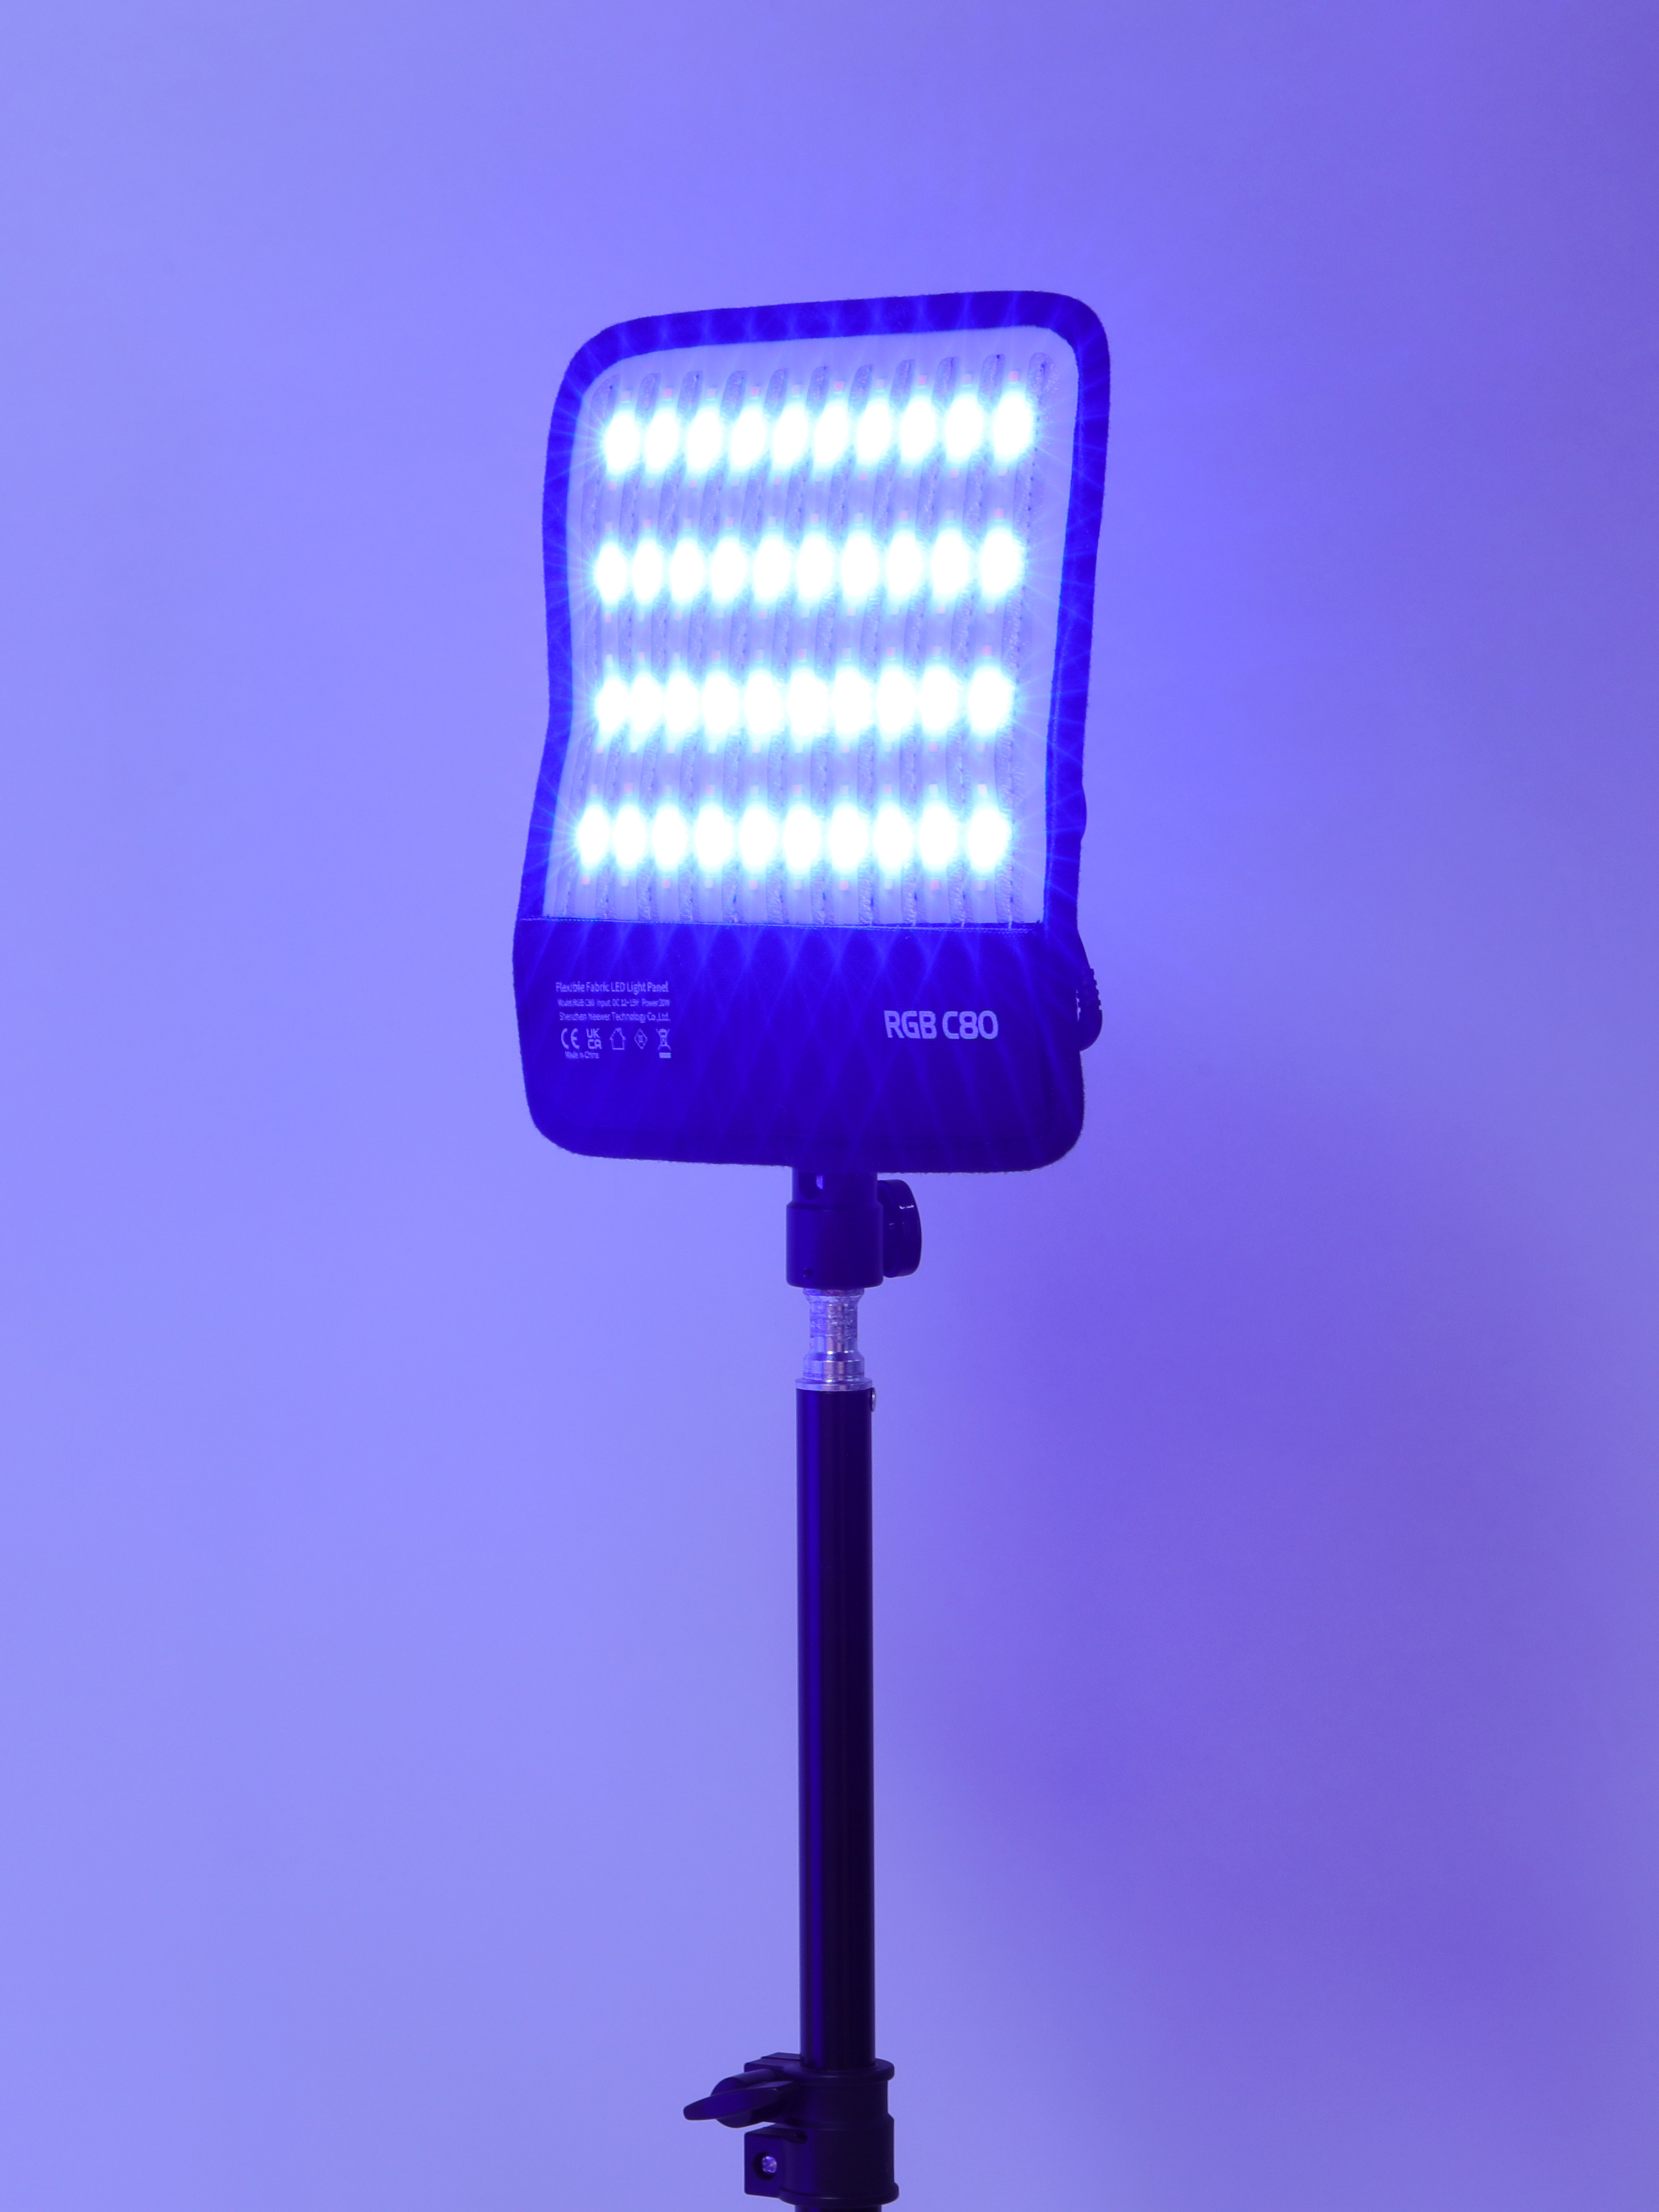 NEEWER RGB C80 Flexible LED Panel Light